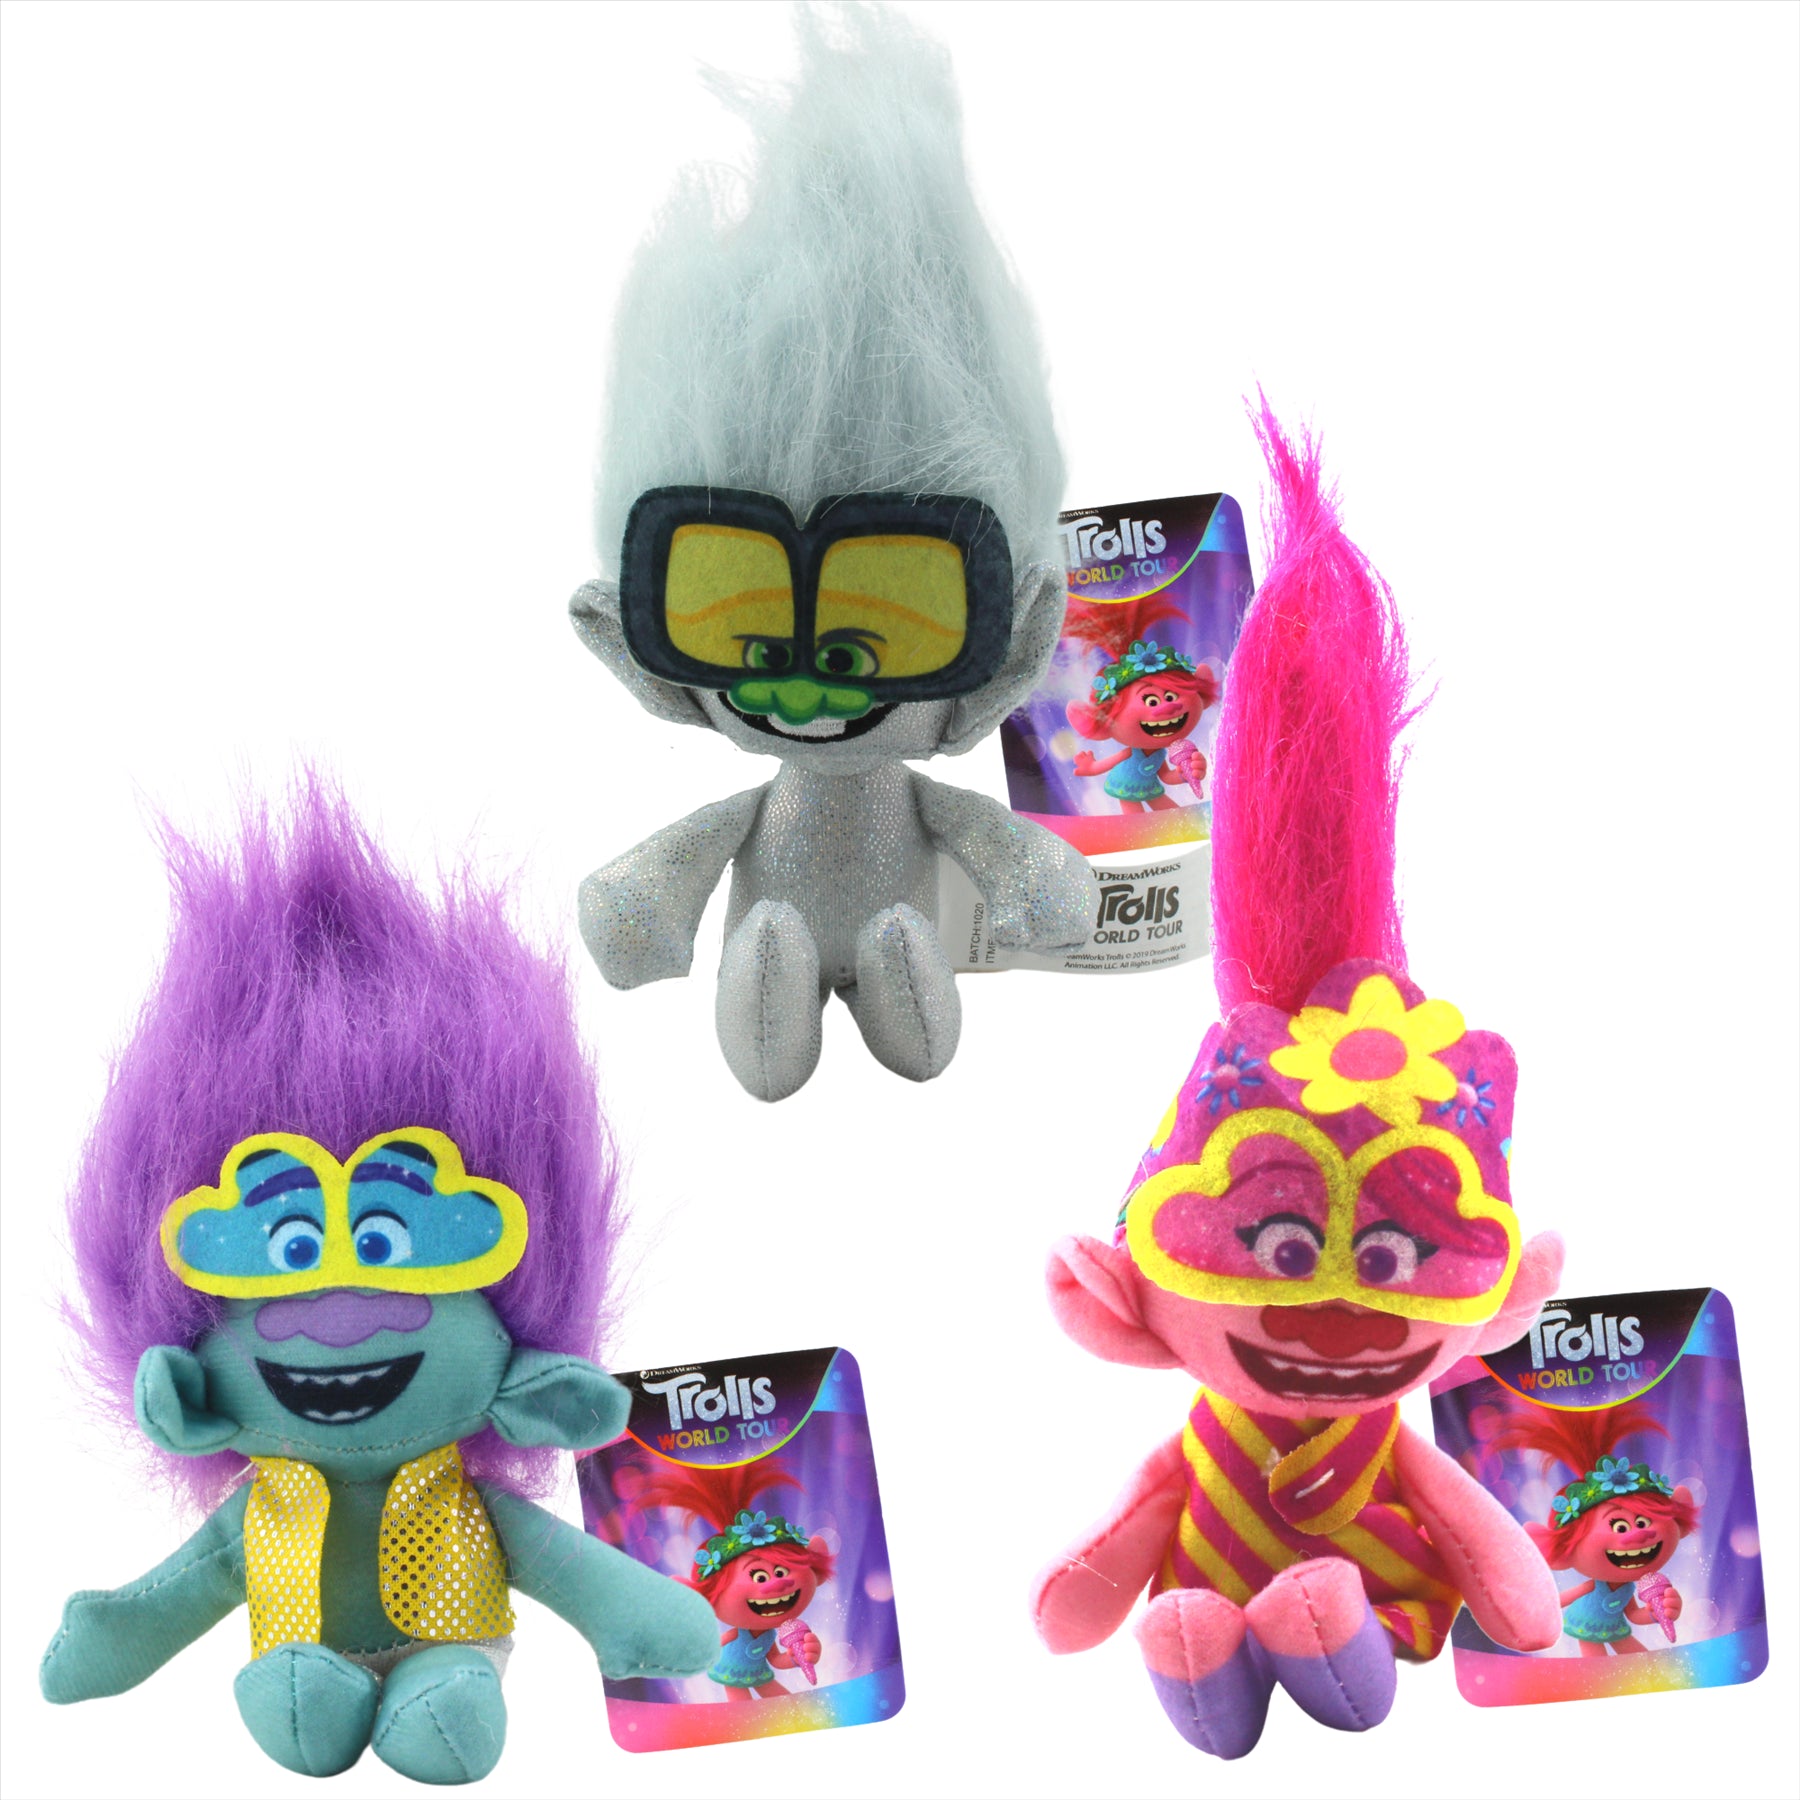 Trolls World Tour 6" Super Soft Plush Toy Set - Tiny Diamond, Branch, and Poppy - Toptoys2u